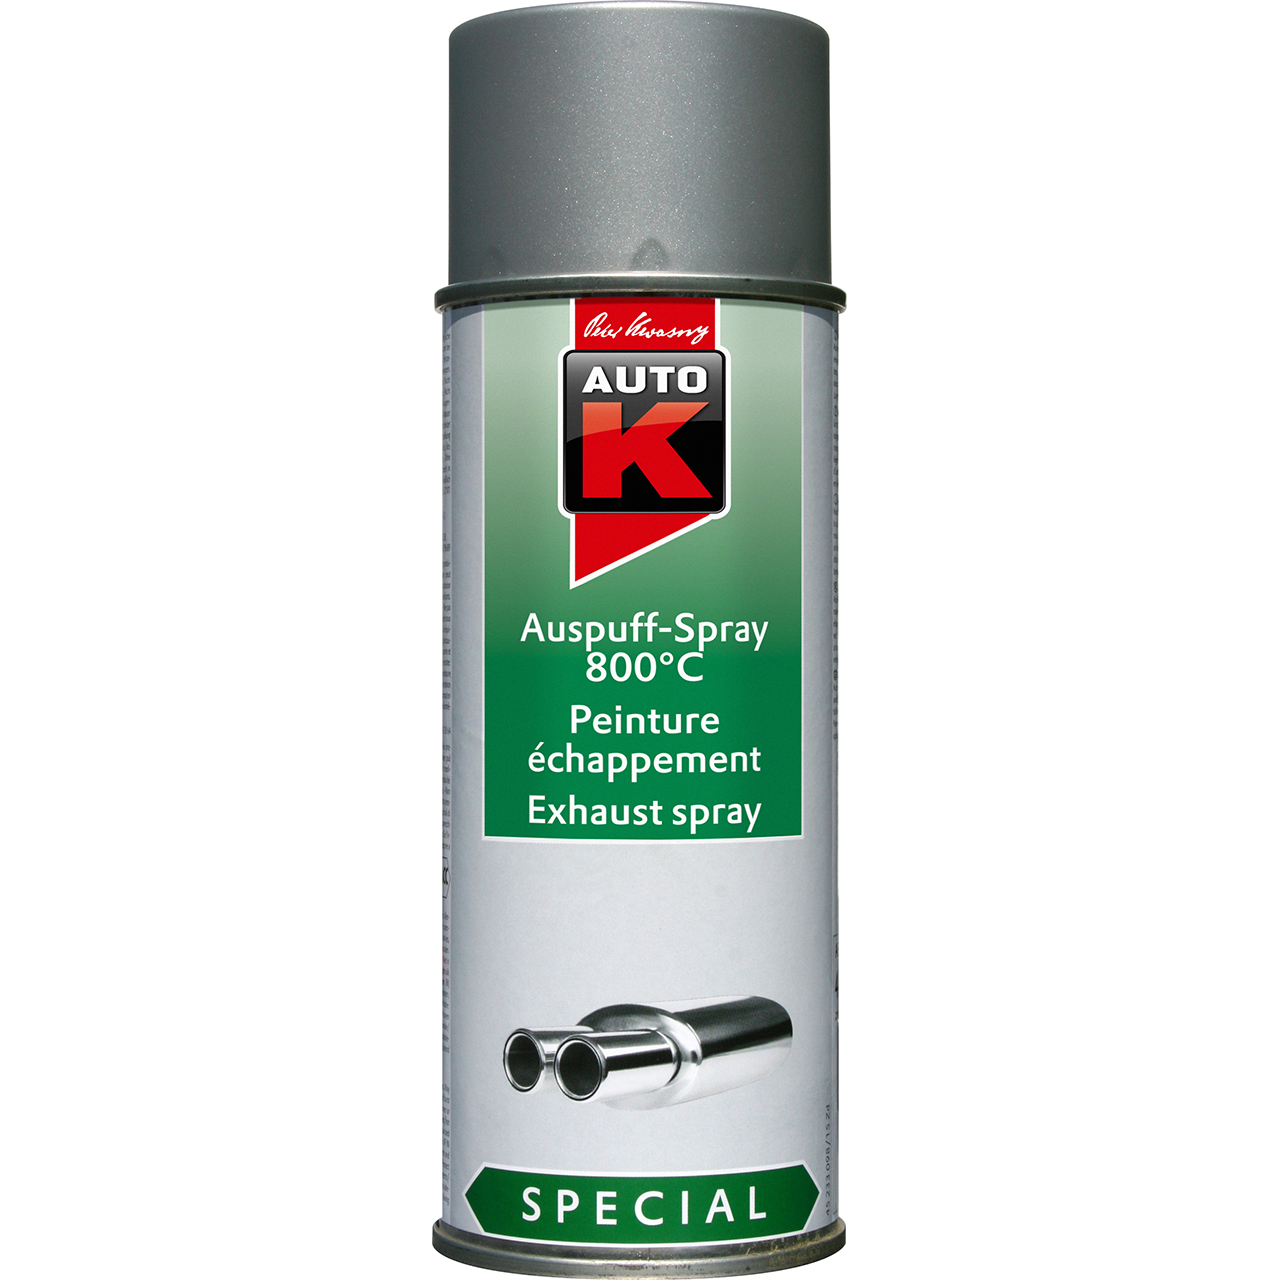 Auto-K Special Auspuff-Spray silber 800°C 400ml